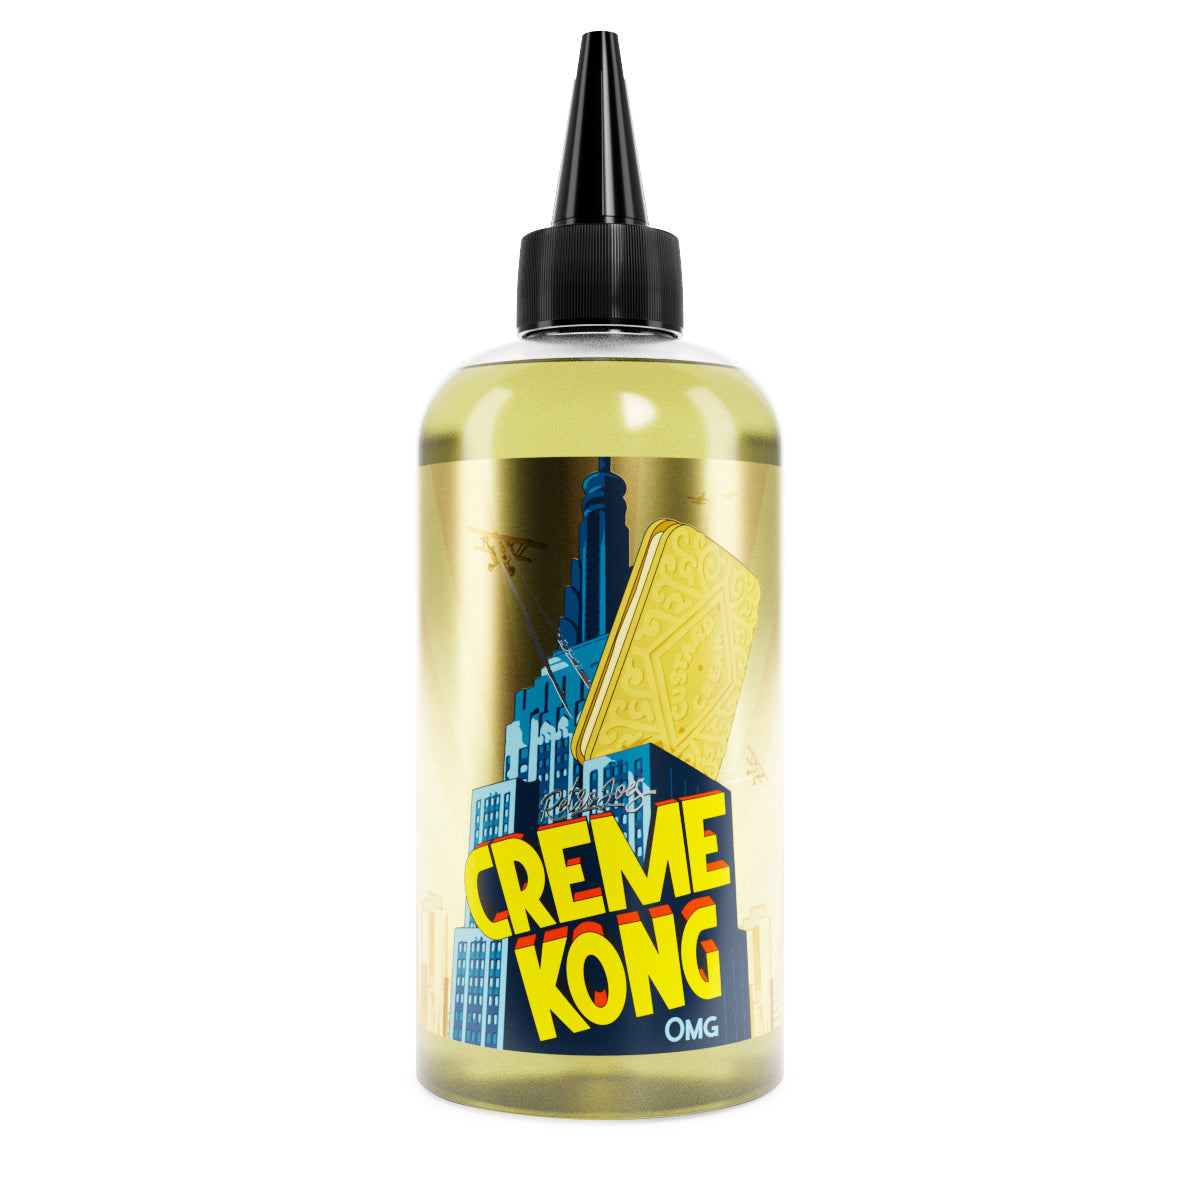 Retro Joes Creme Kong E-Liquid 0mg 200ml Shortfill E-Liquid